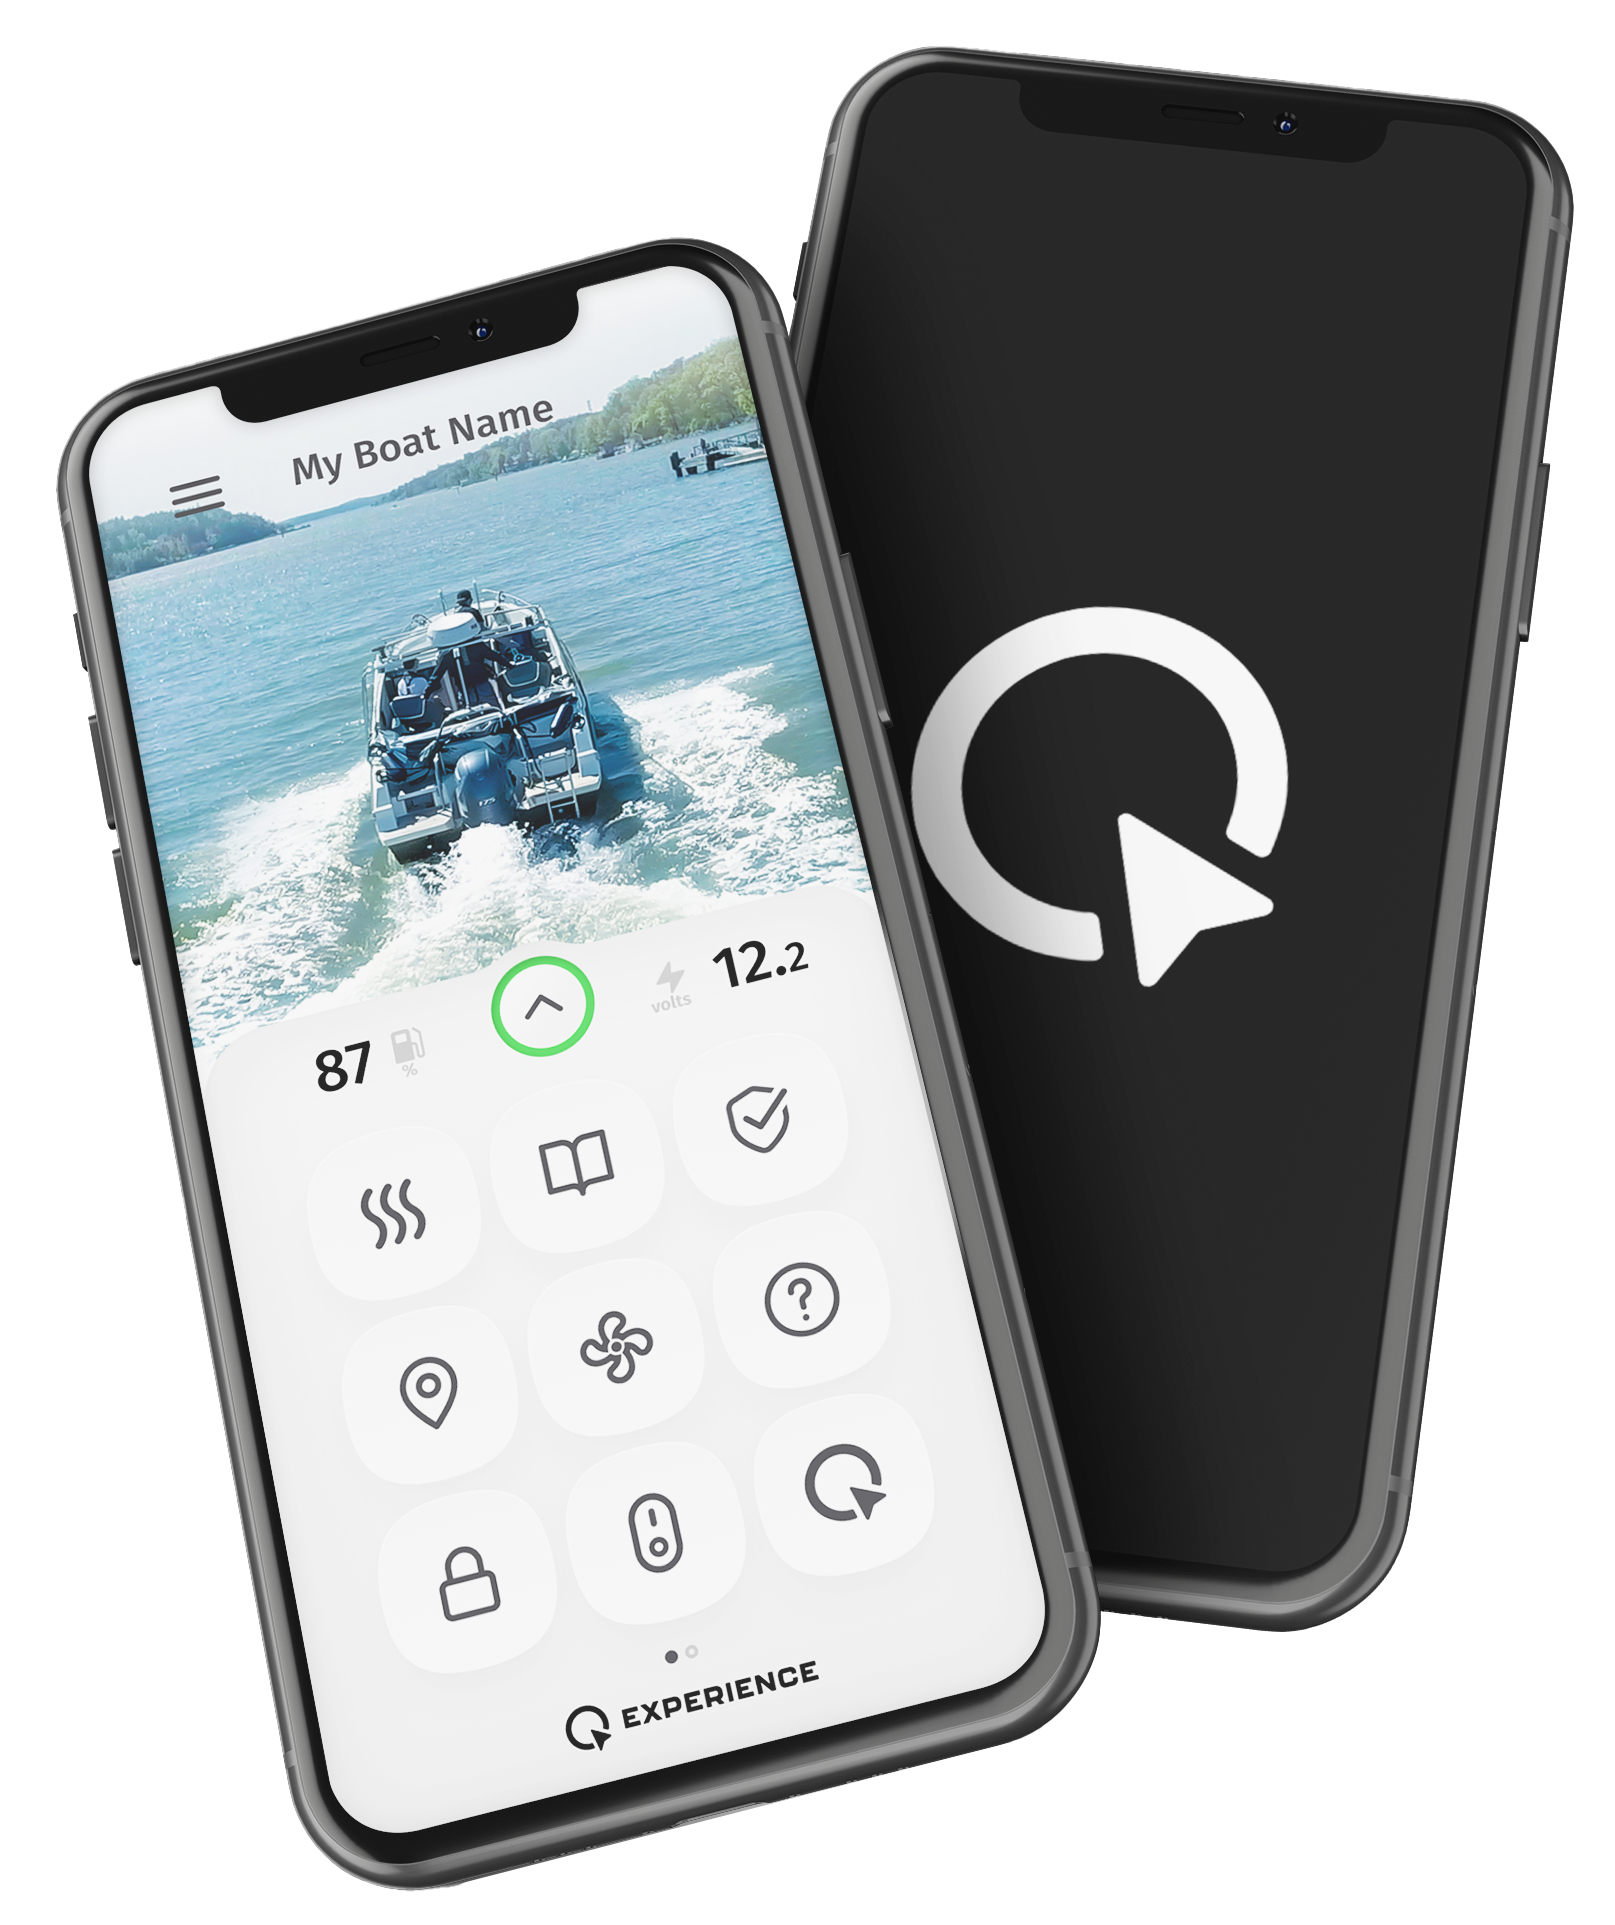 The Q mobile app